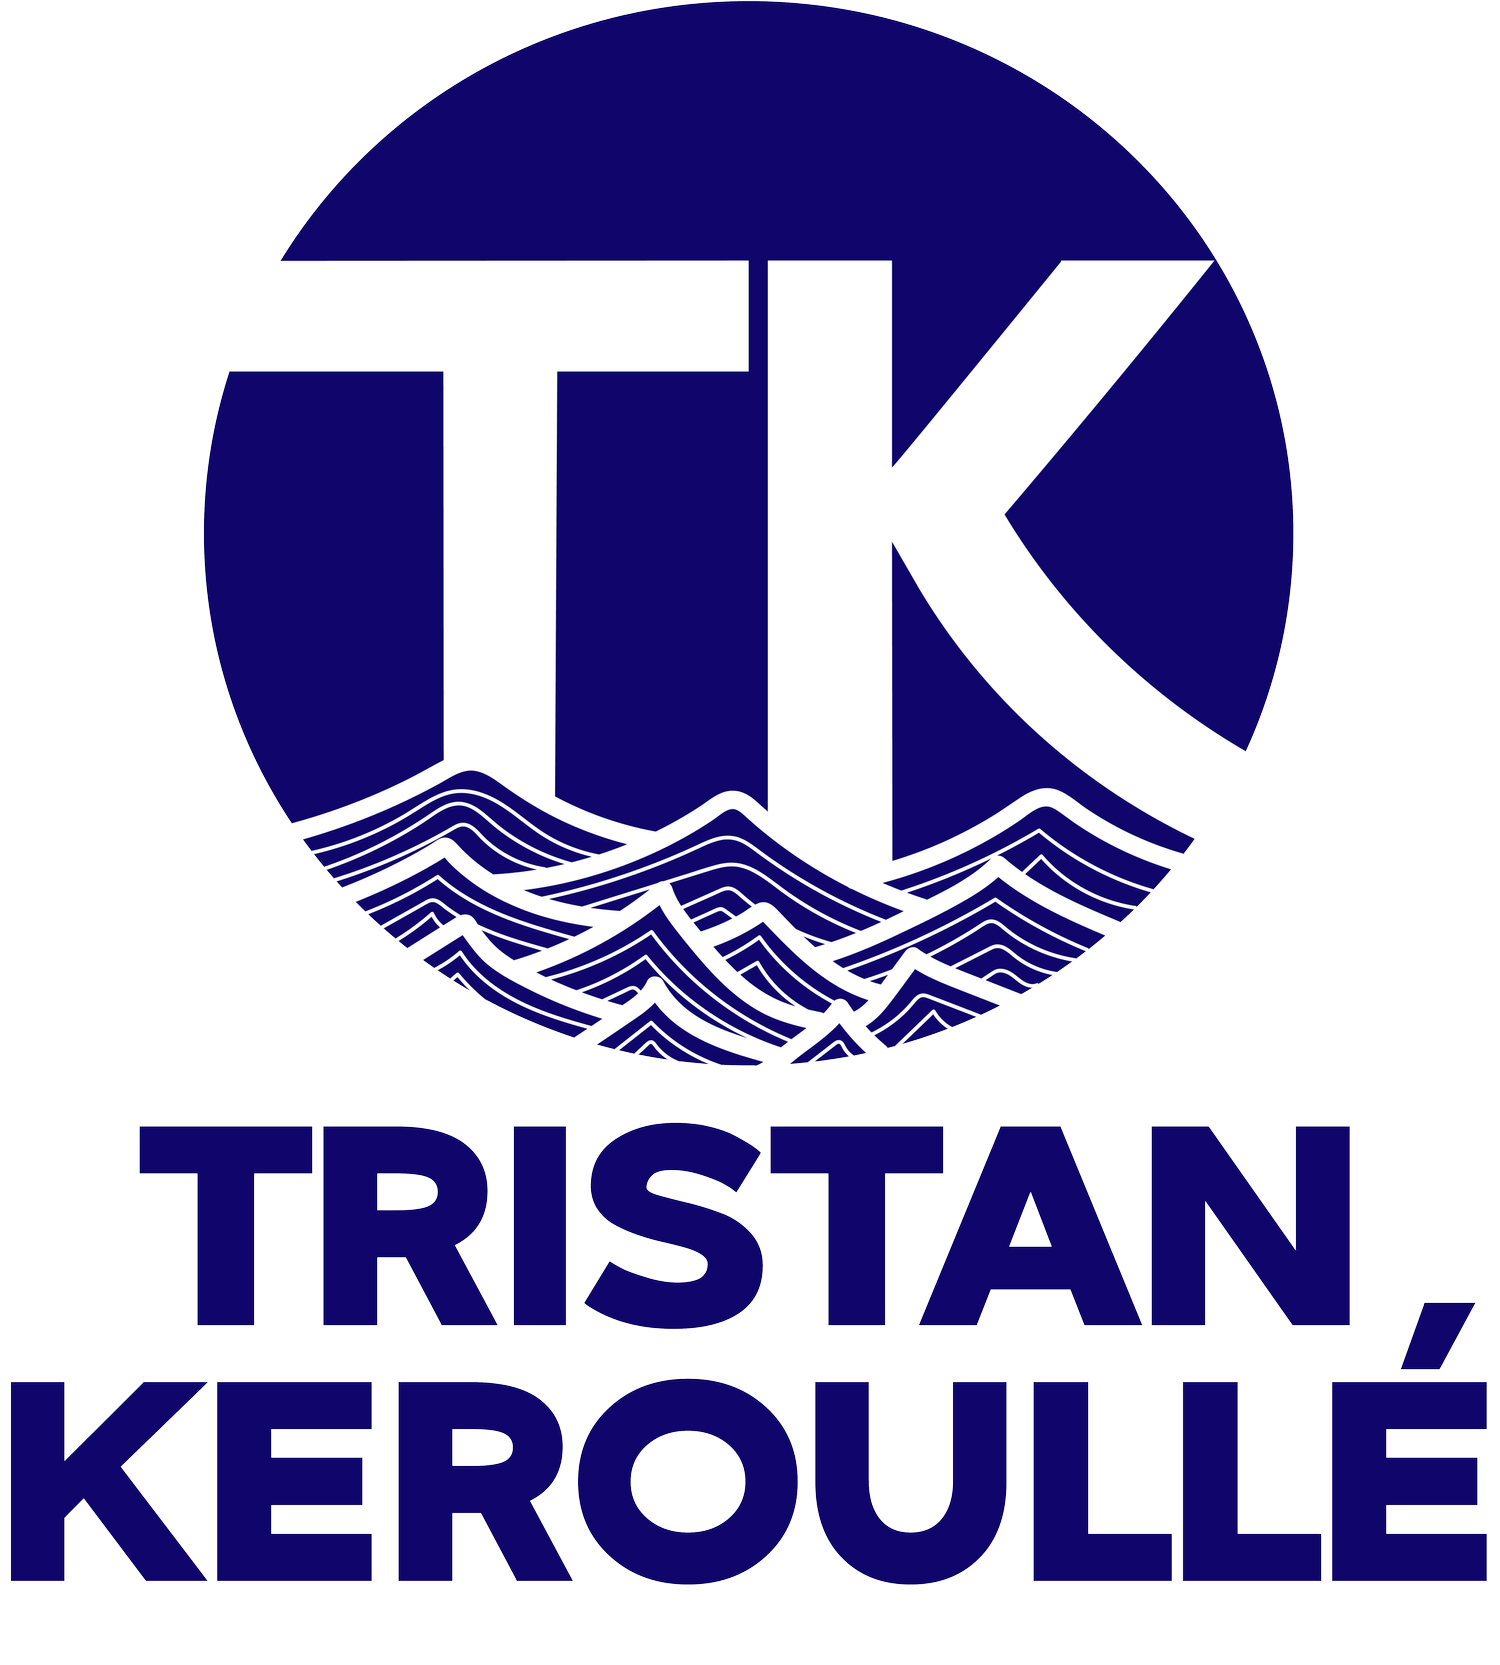 Tristan Keroullé